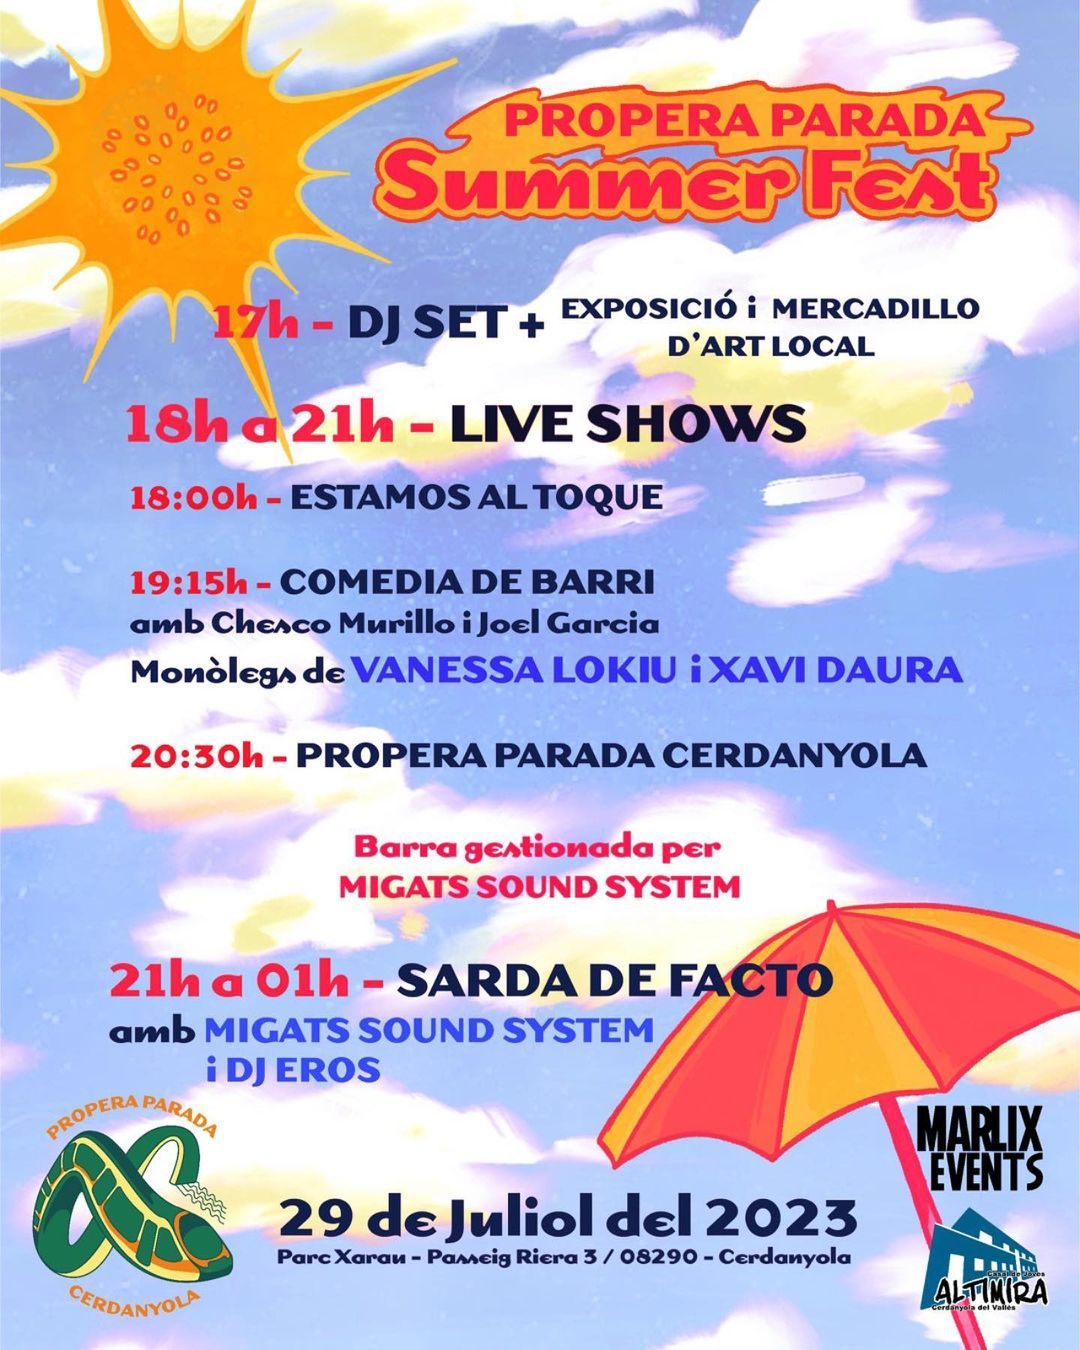 Propera parada Summer Fest